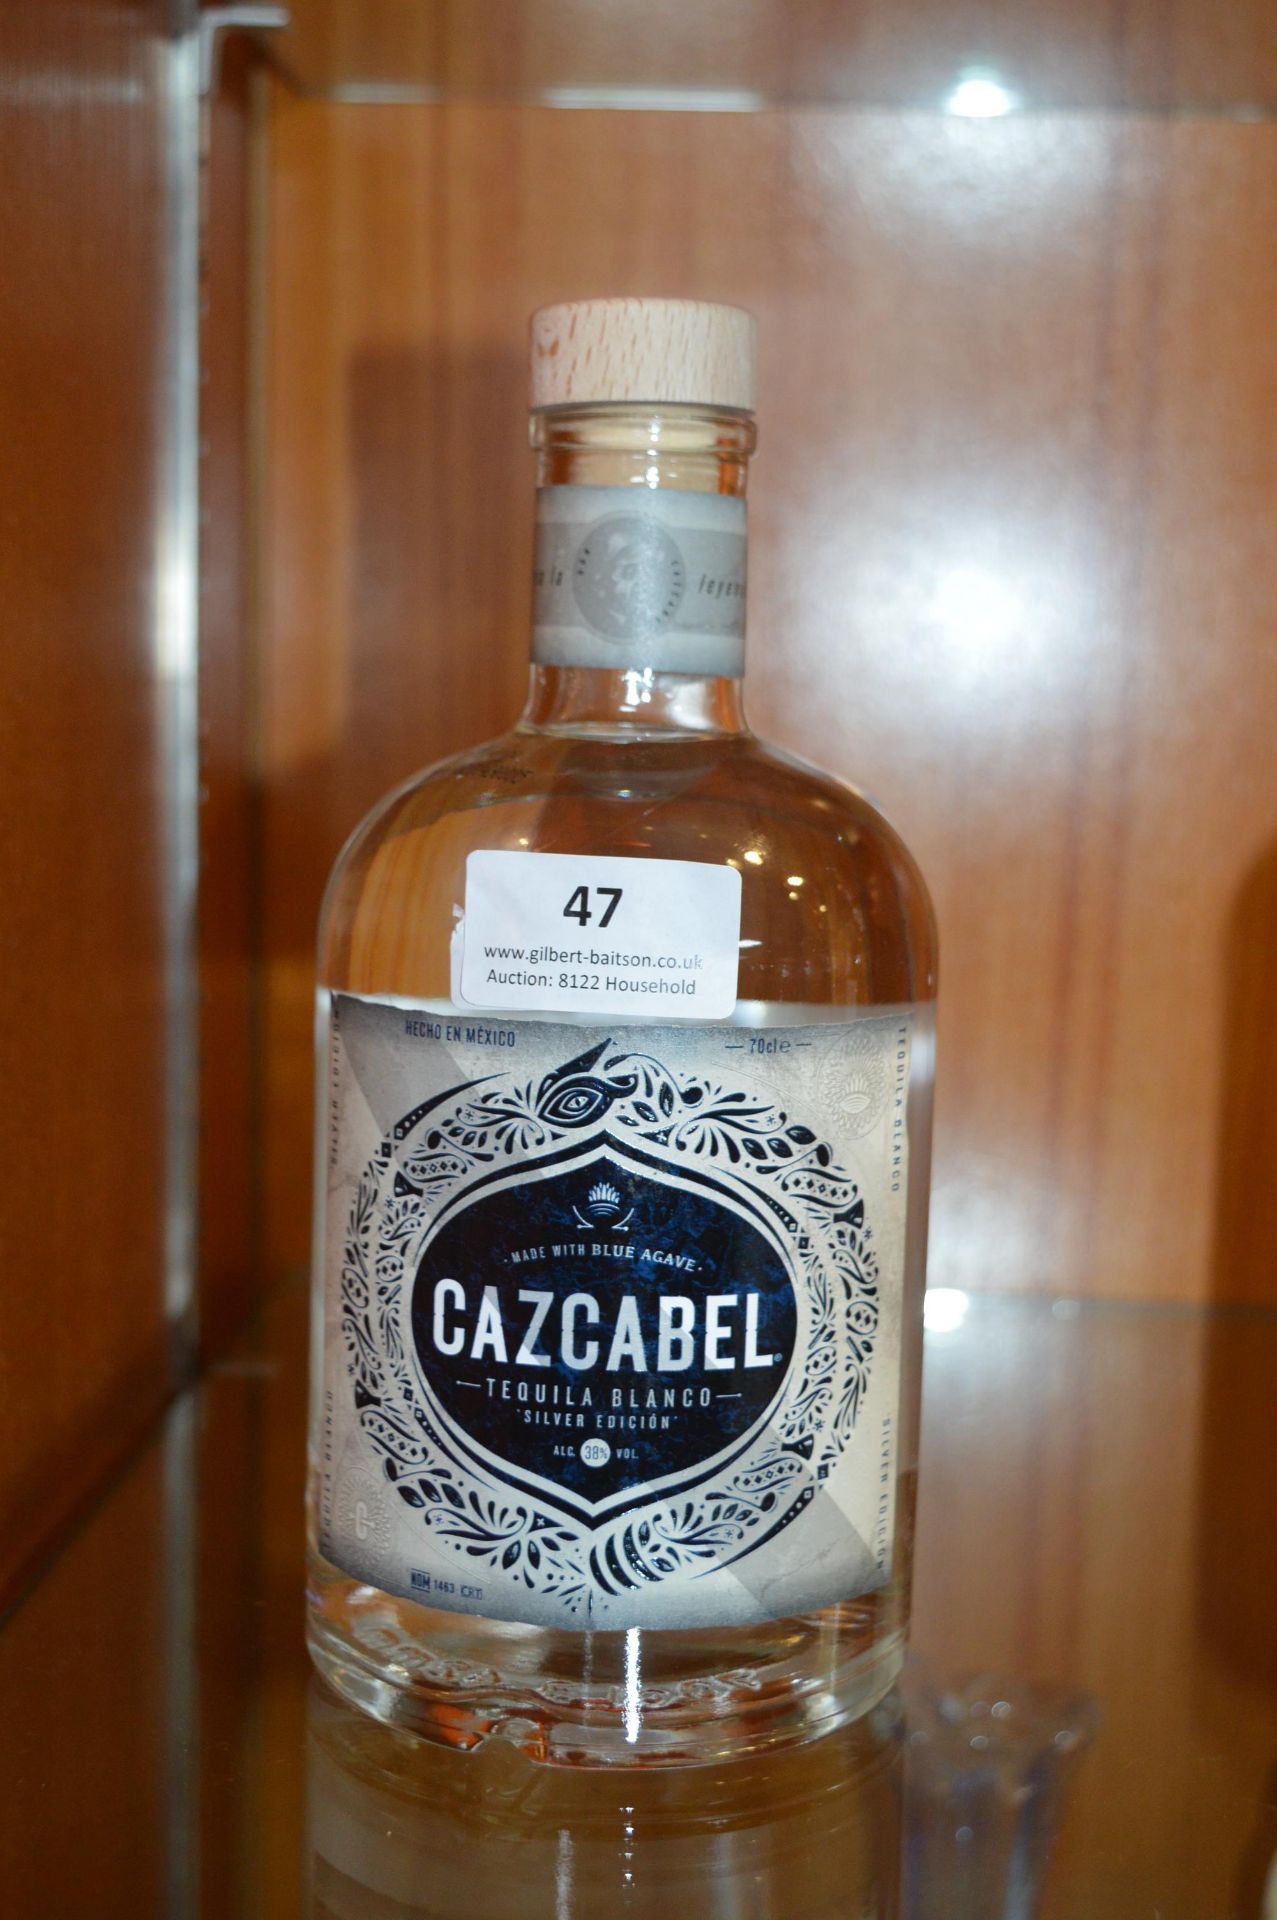 70cl Bottle of Cazcabel Tequila